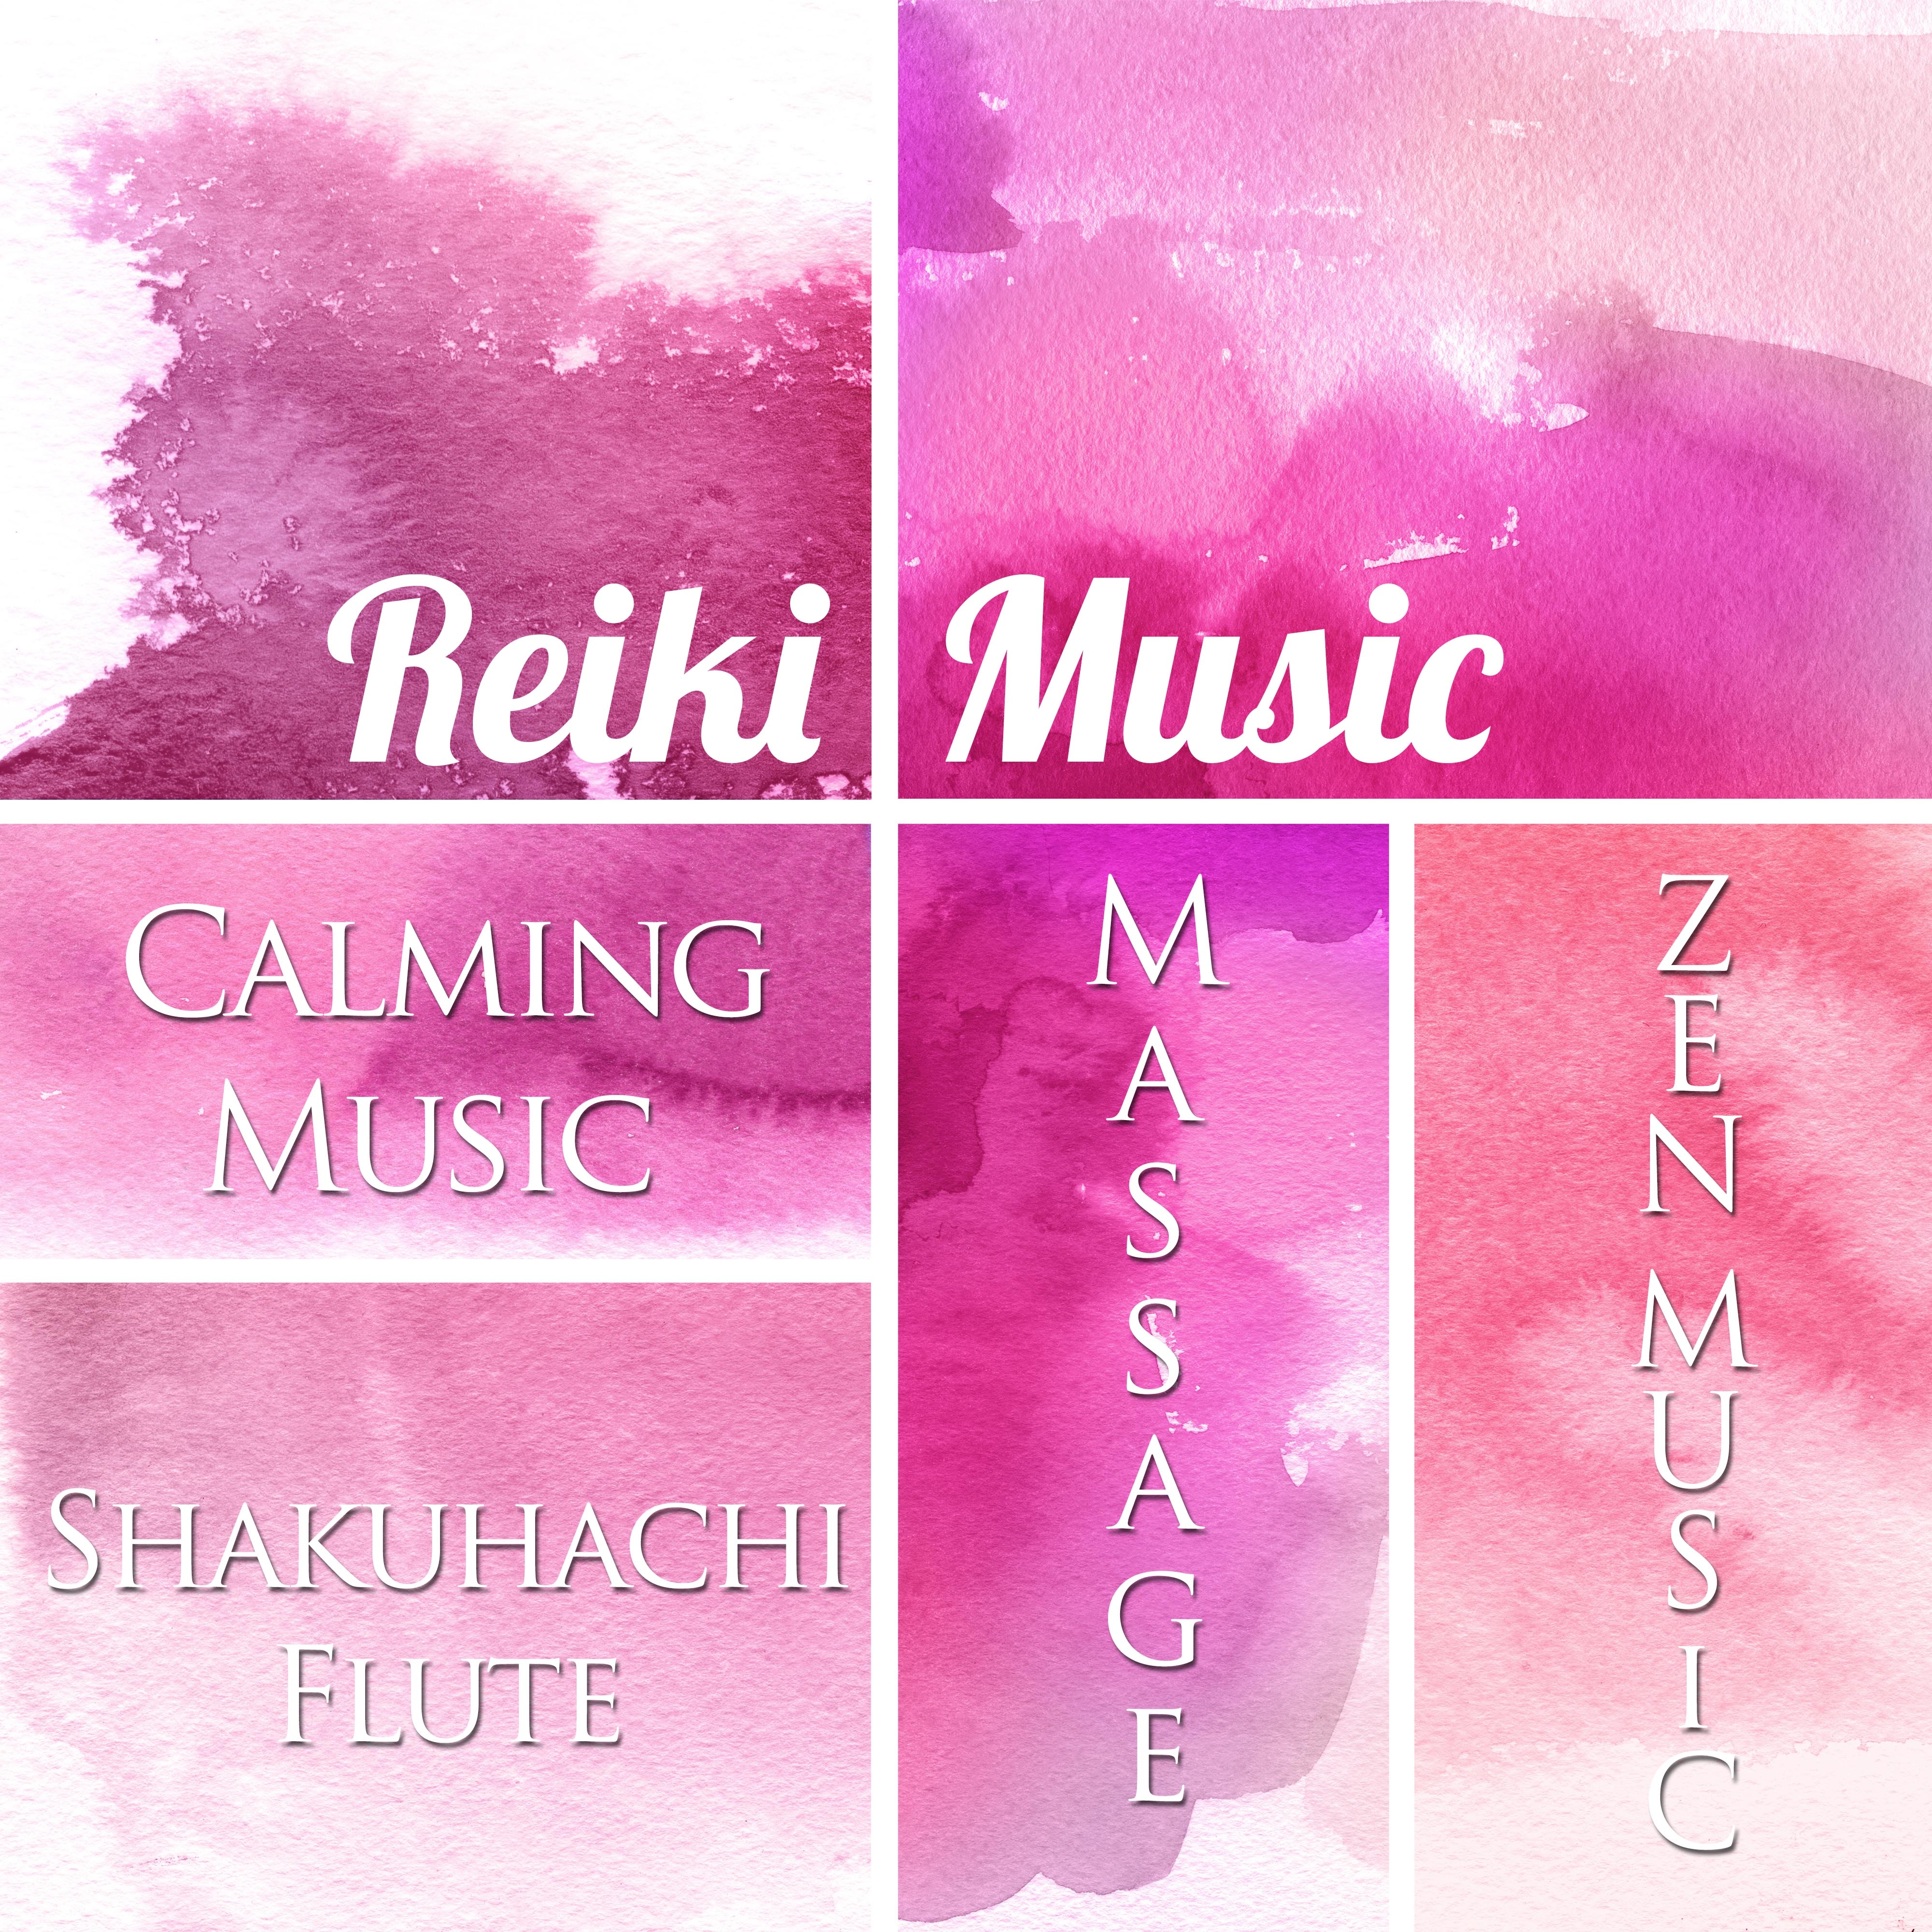 Reiki Music - Calming Music with Shakuhachi Flute, Bamboo Flute